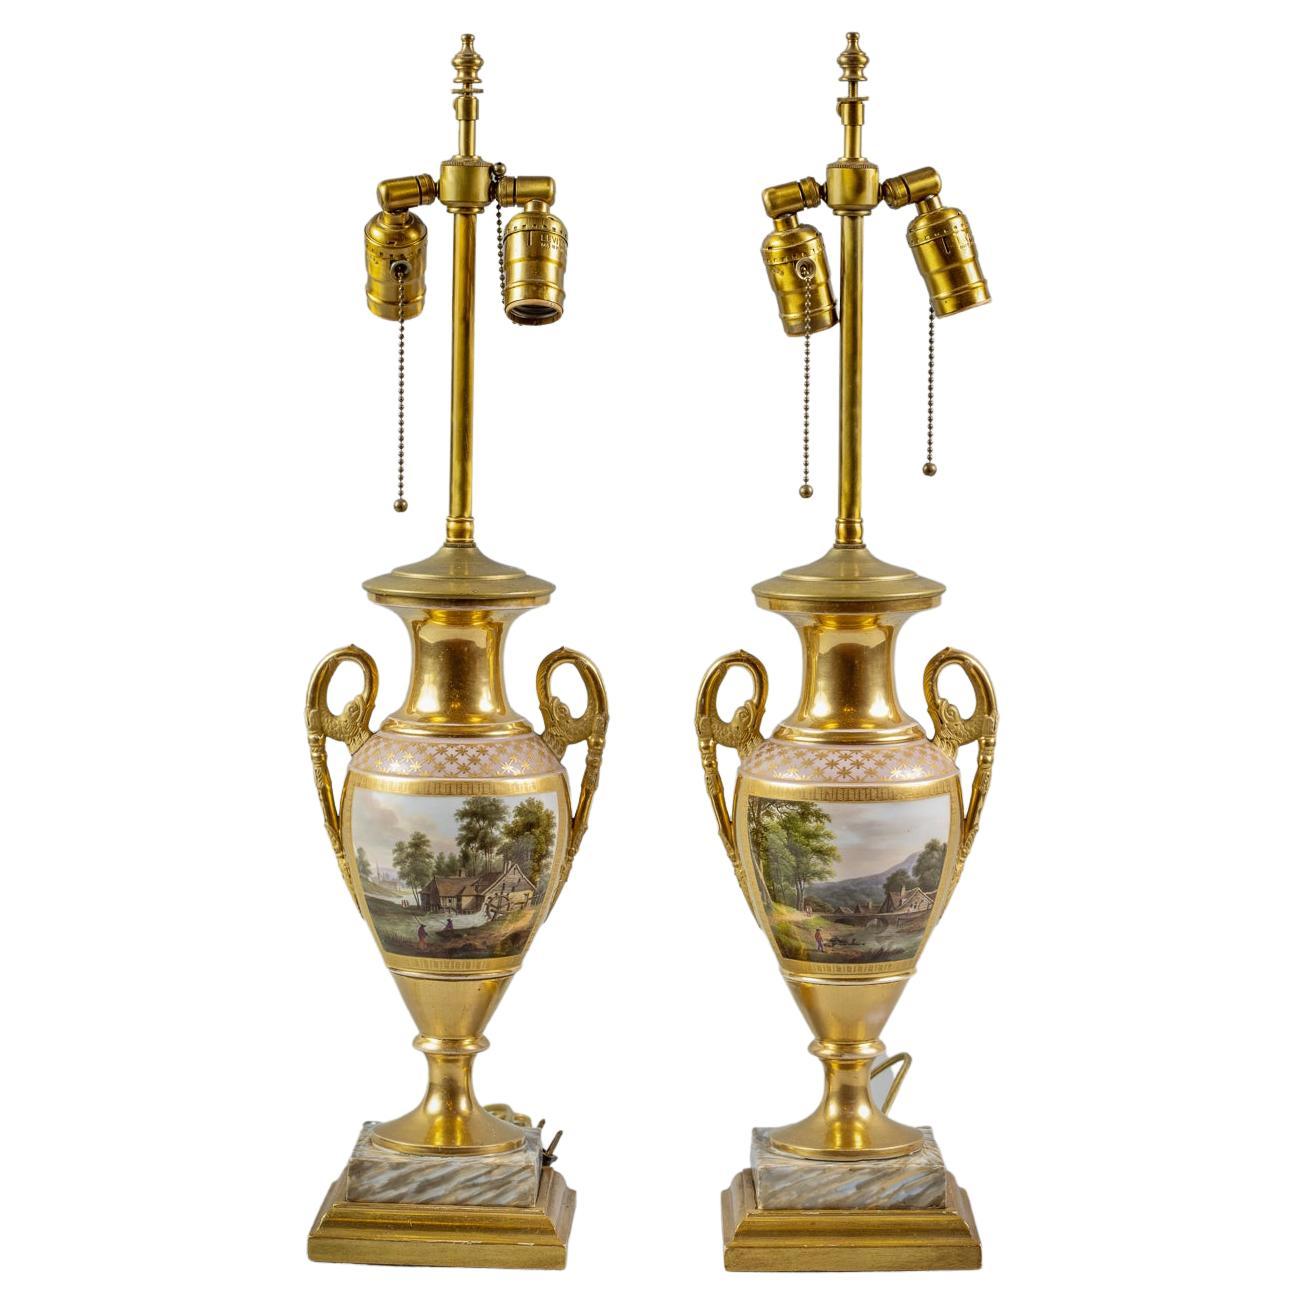 Pair of Paris Porcelain Two-Handled Vases as Lamps, circa 1820